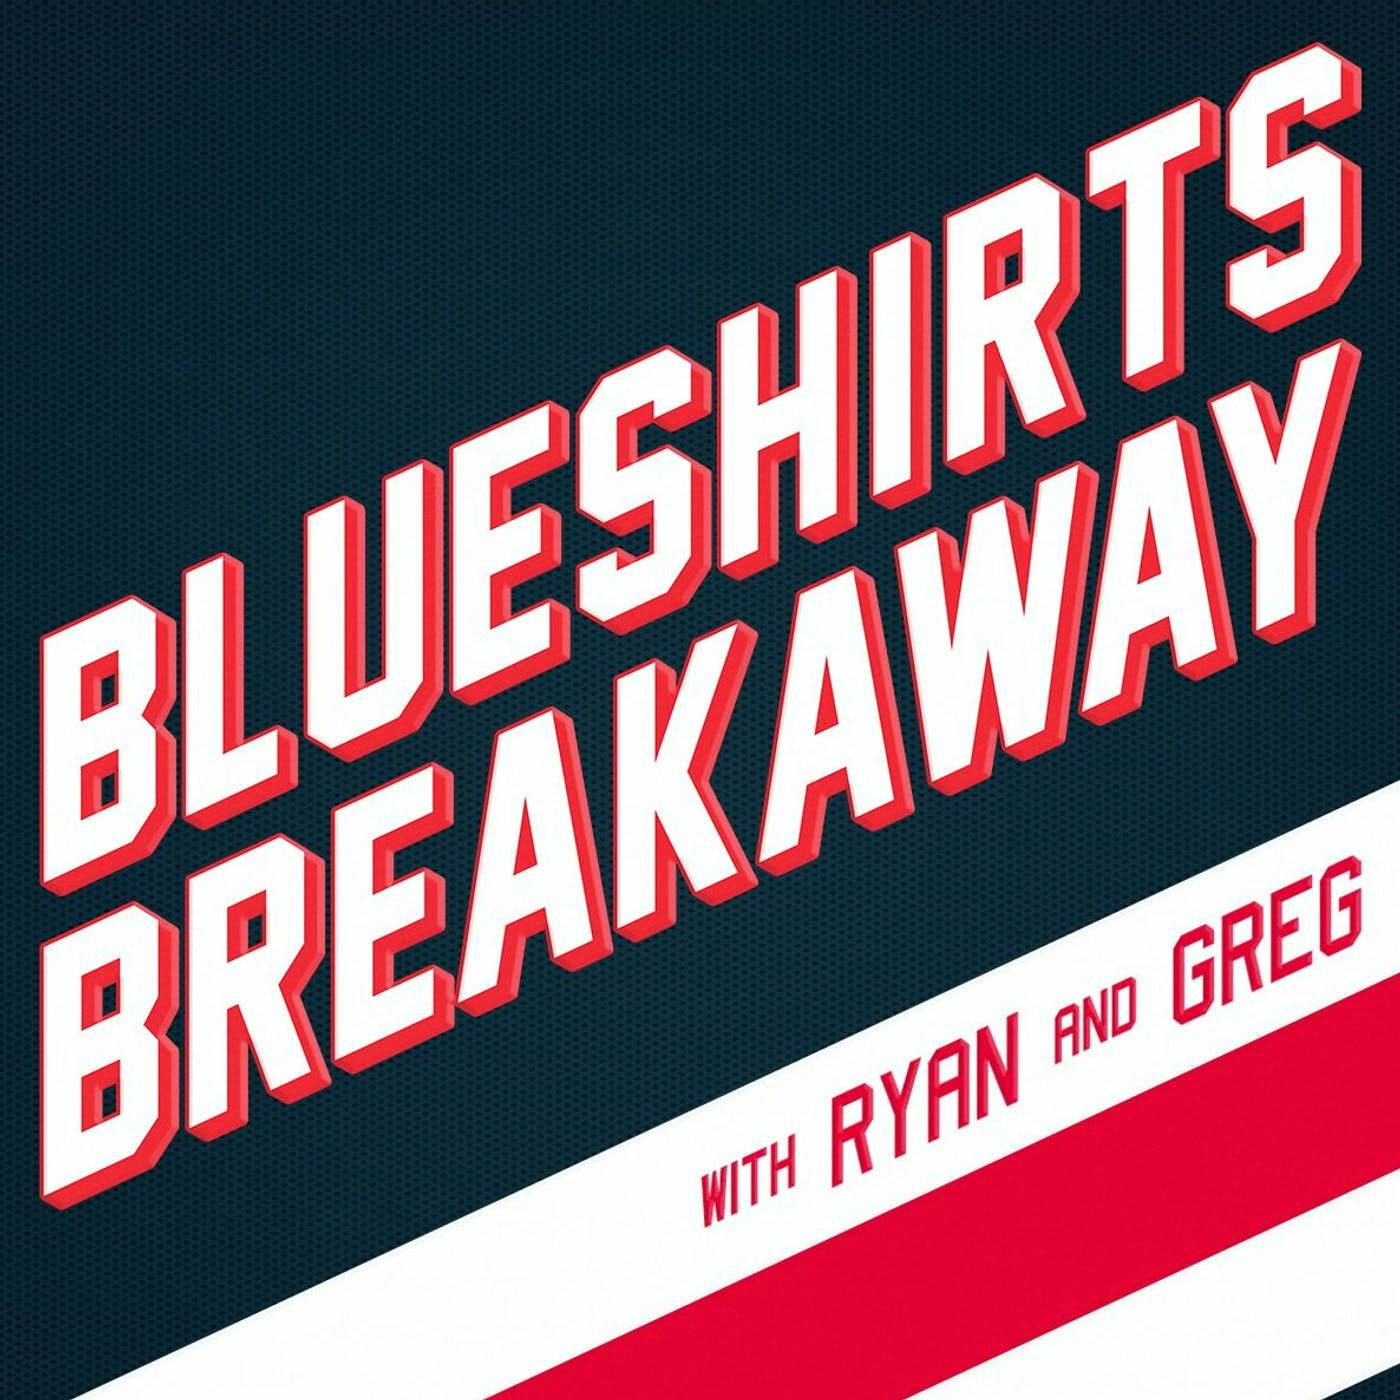 Blueshirts Breakaway EP 140 - Dog Days of Summer with Keith Kinkaid & Shayna Goldman